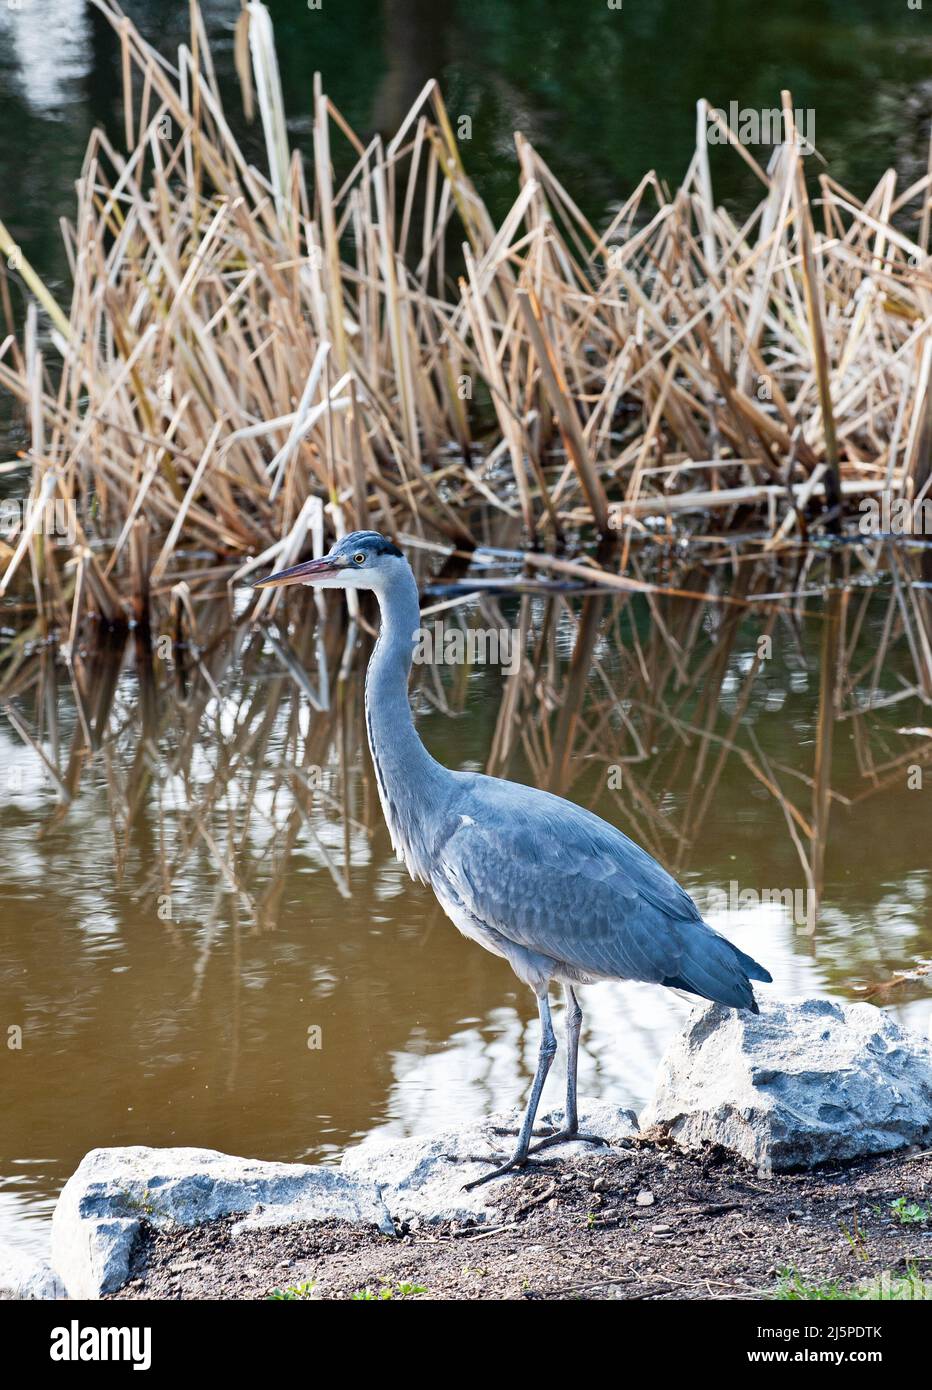 The Grey Heron on the river, Irish wildlife Stock Photo